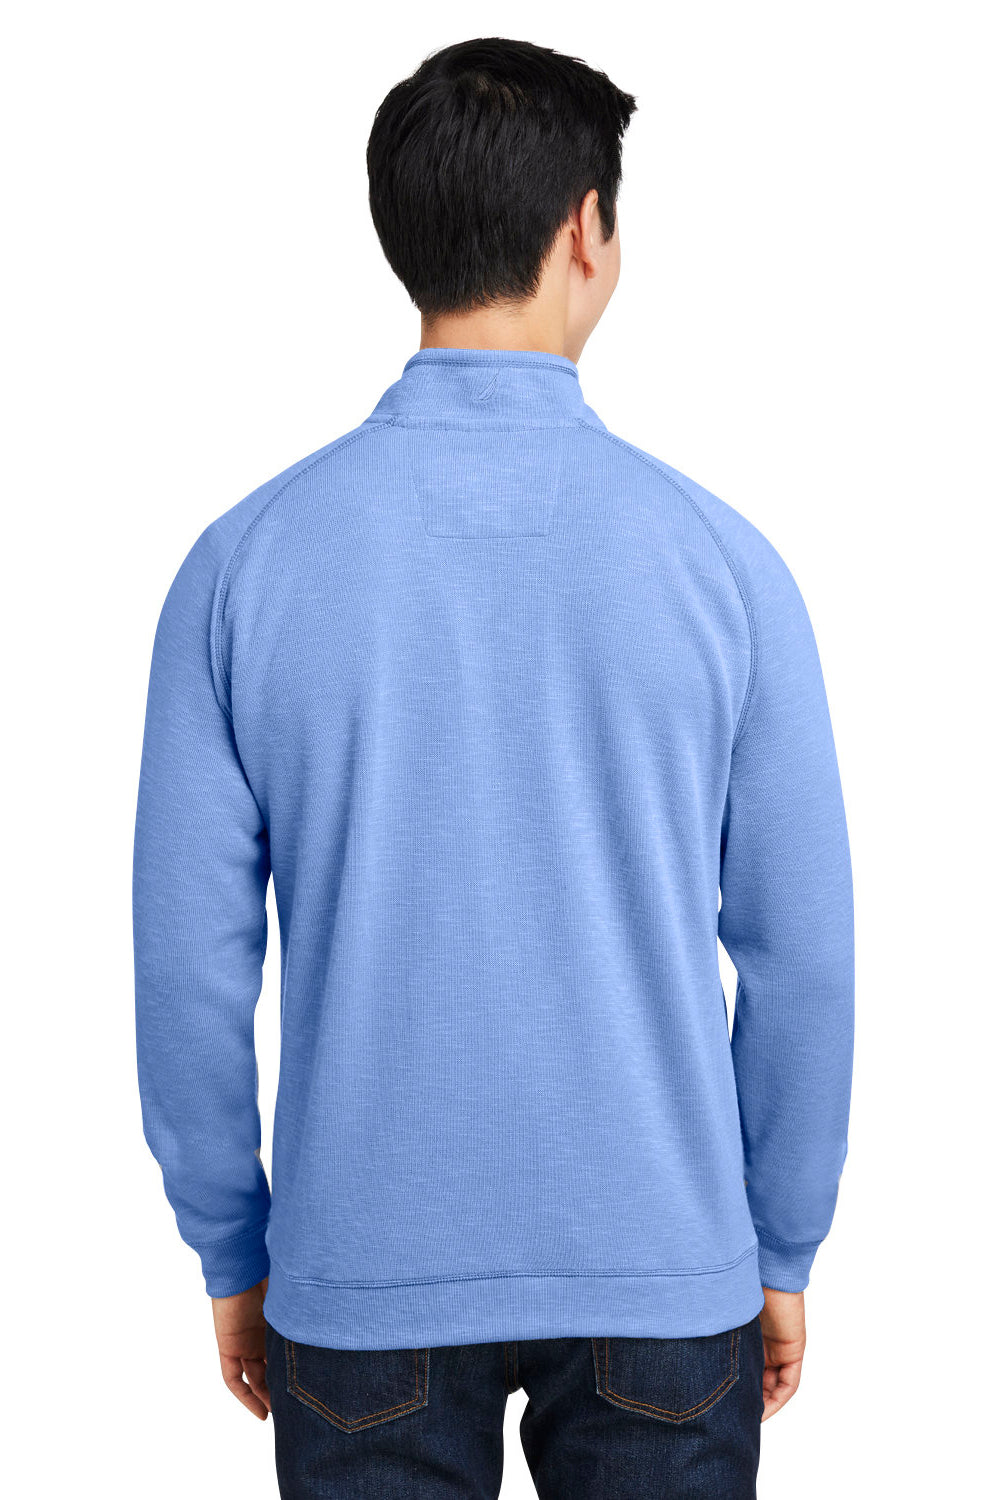 Nautica N17991 Mens Sun Surfer Supreme 1/4 Zip Sweatshirt Vintage Mavi Blue Back